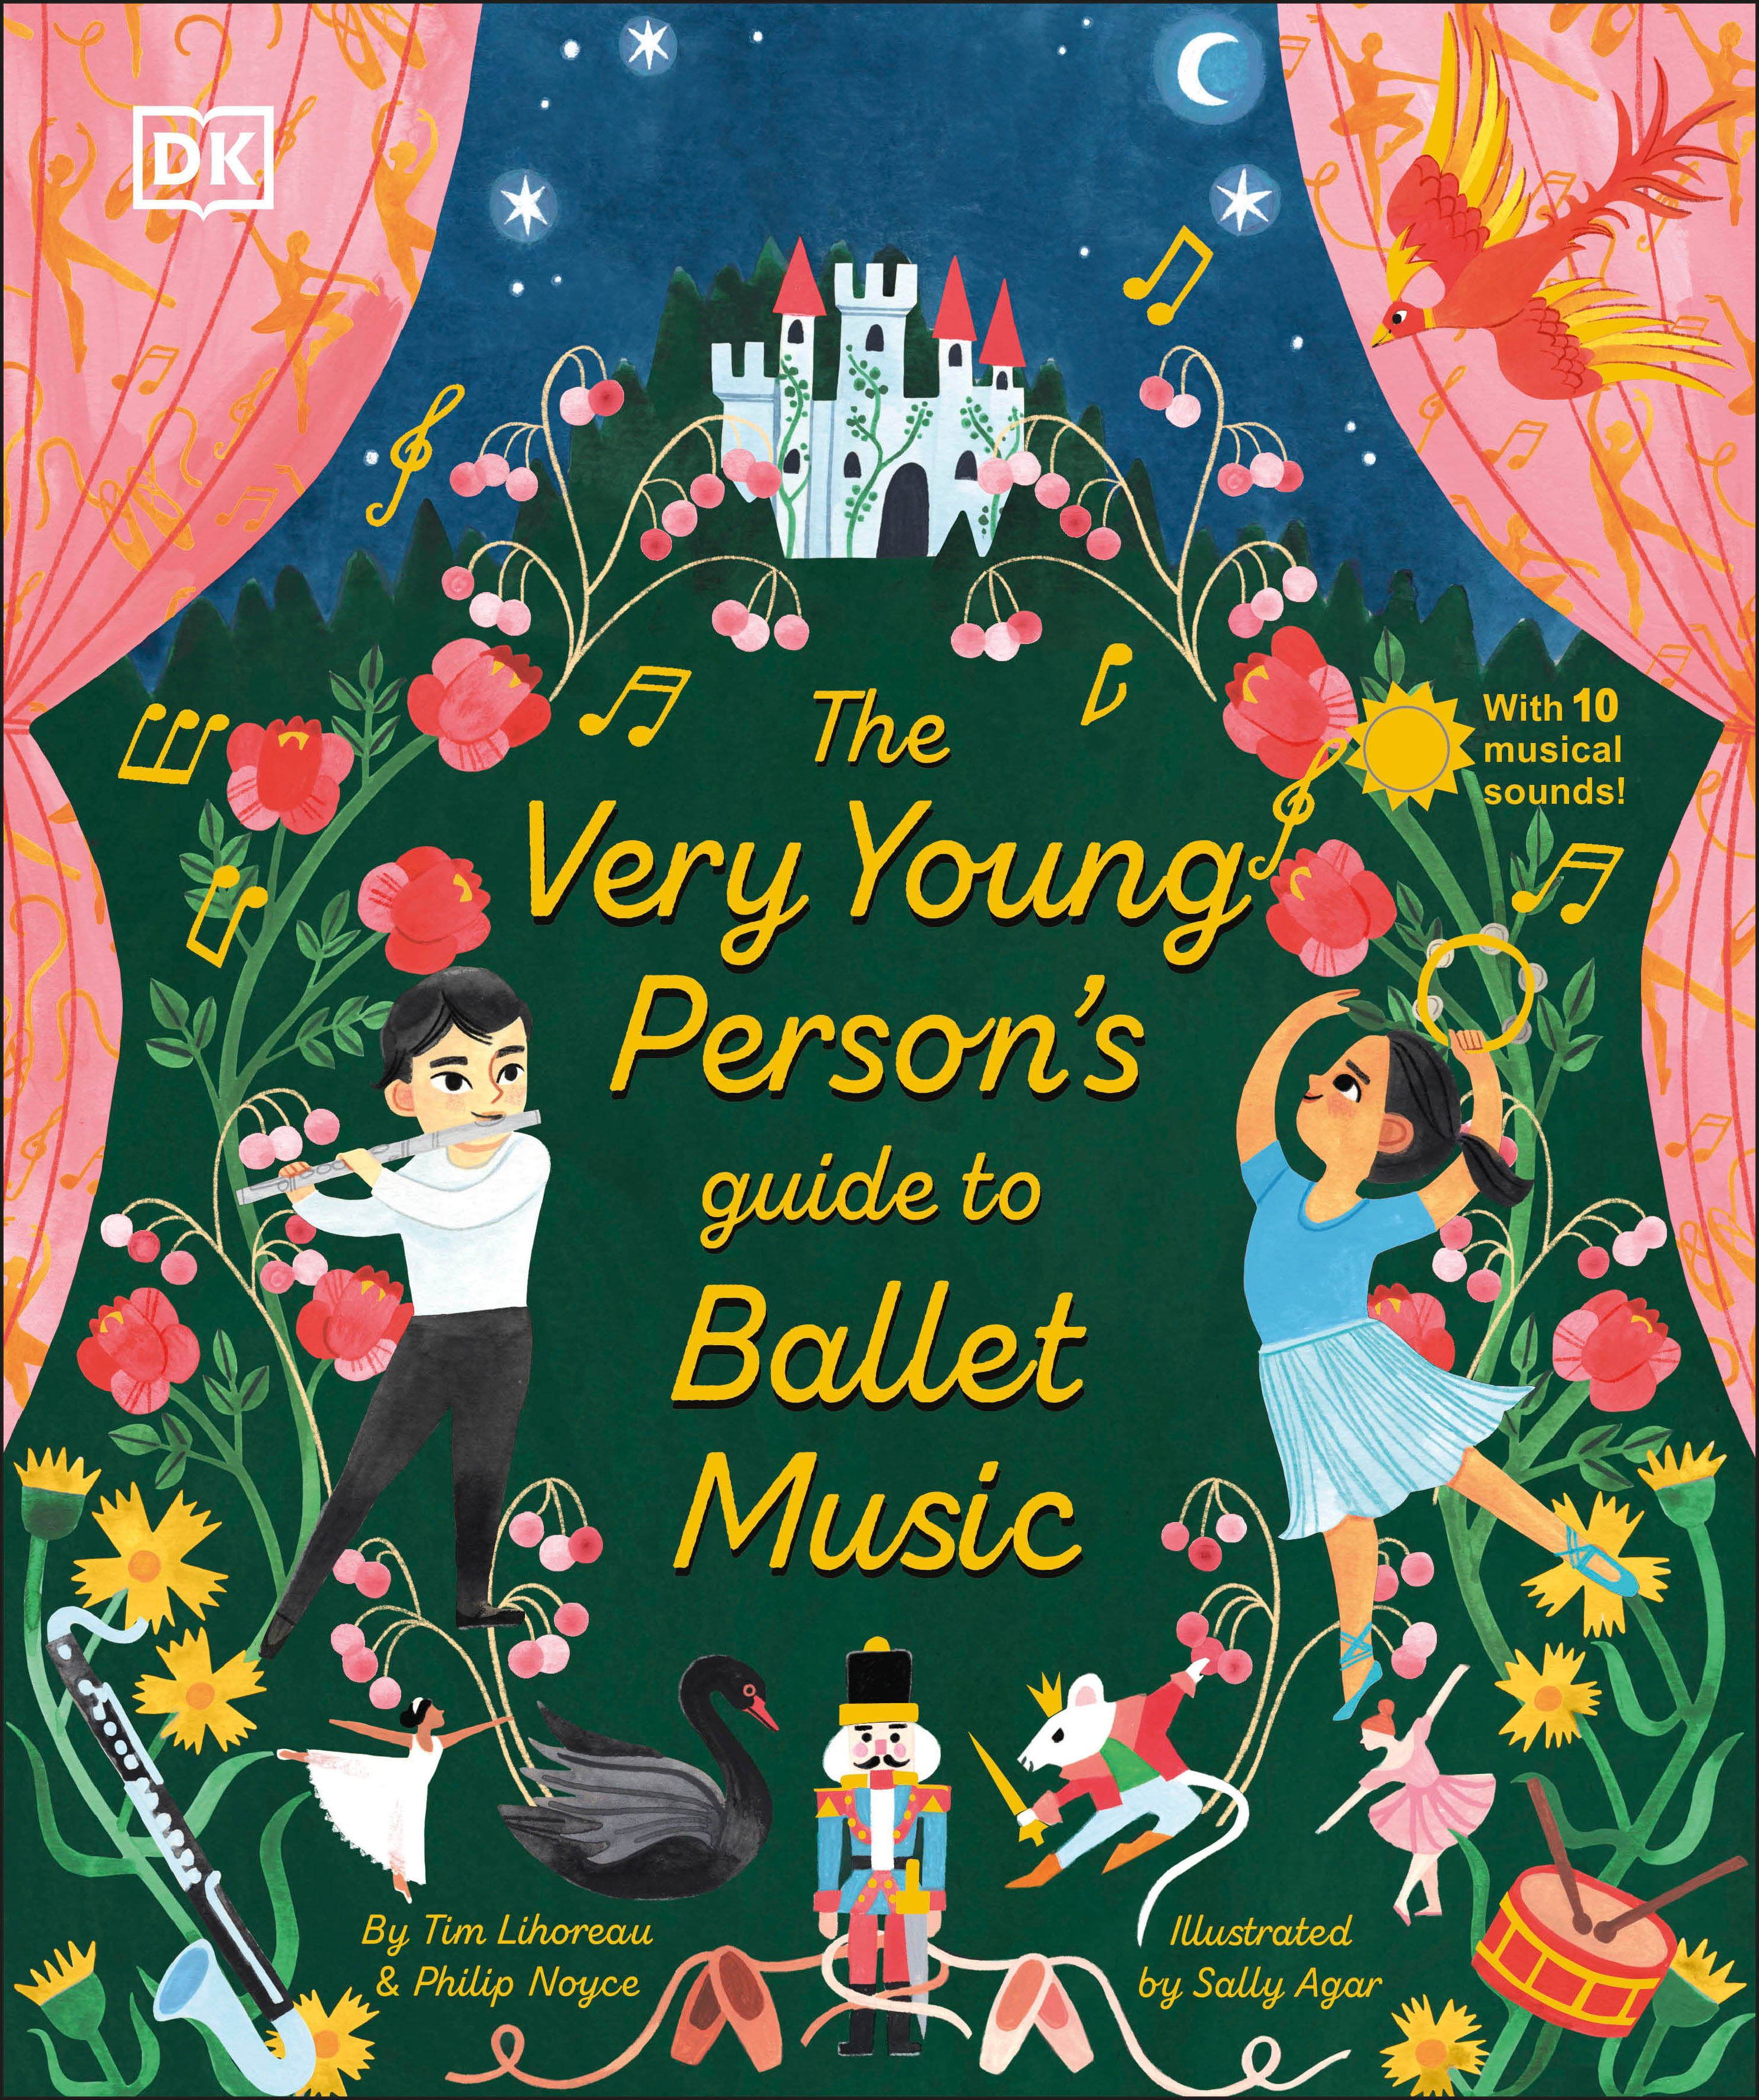 The Very Young Person's Guide to Ballet Music | Lihoreau, Tim (Auteur) | Noyce, Philip (Auteur) | Agar, Sally (Illustrateur)